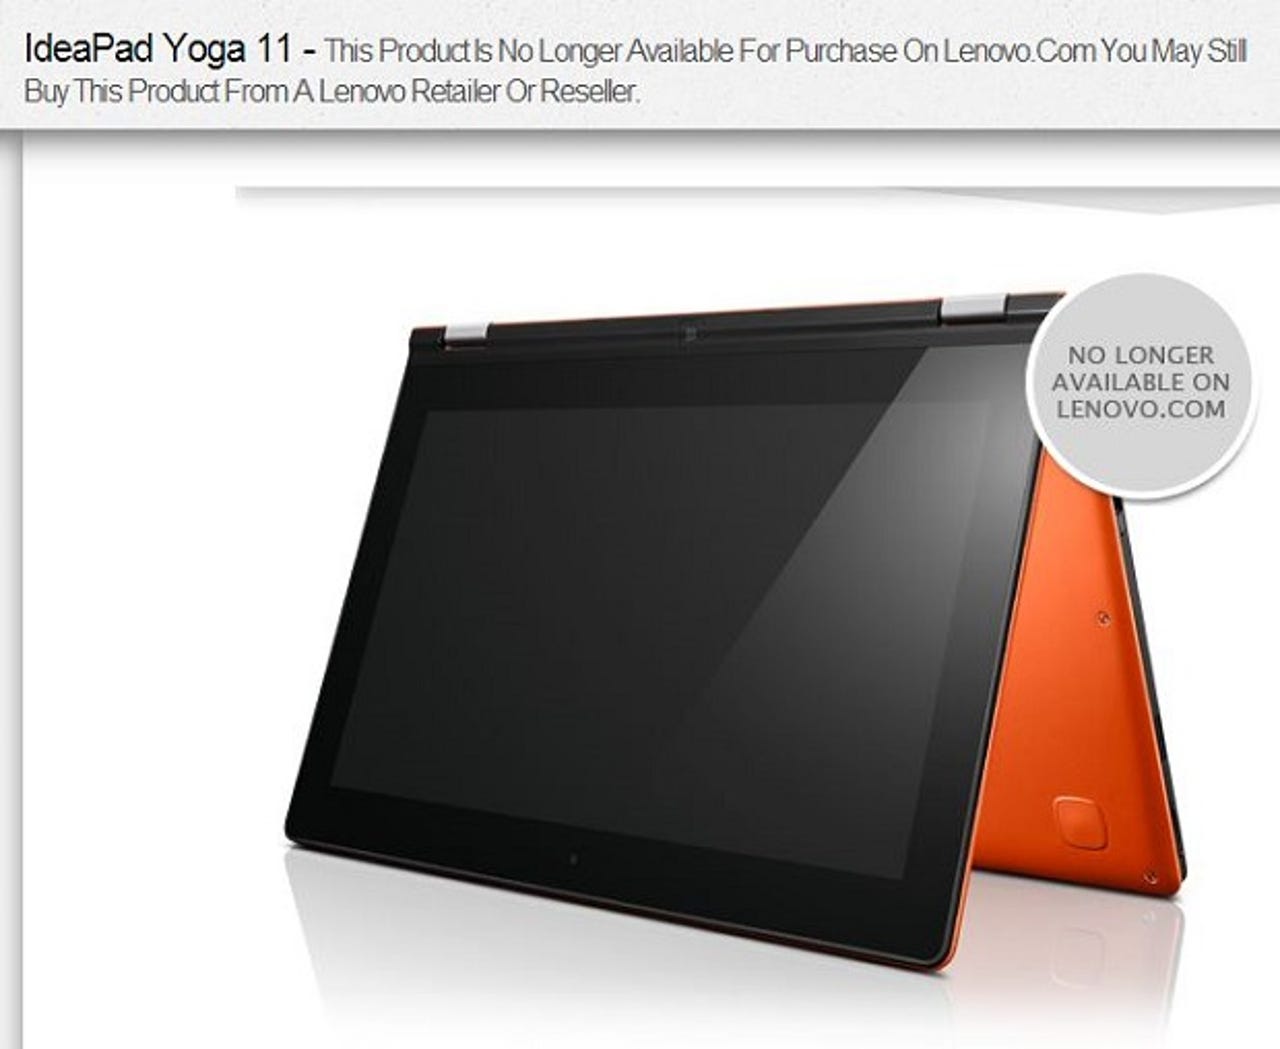 lenovo-ideapad-yoga-windows-rt-tablet-laptop-discontinued